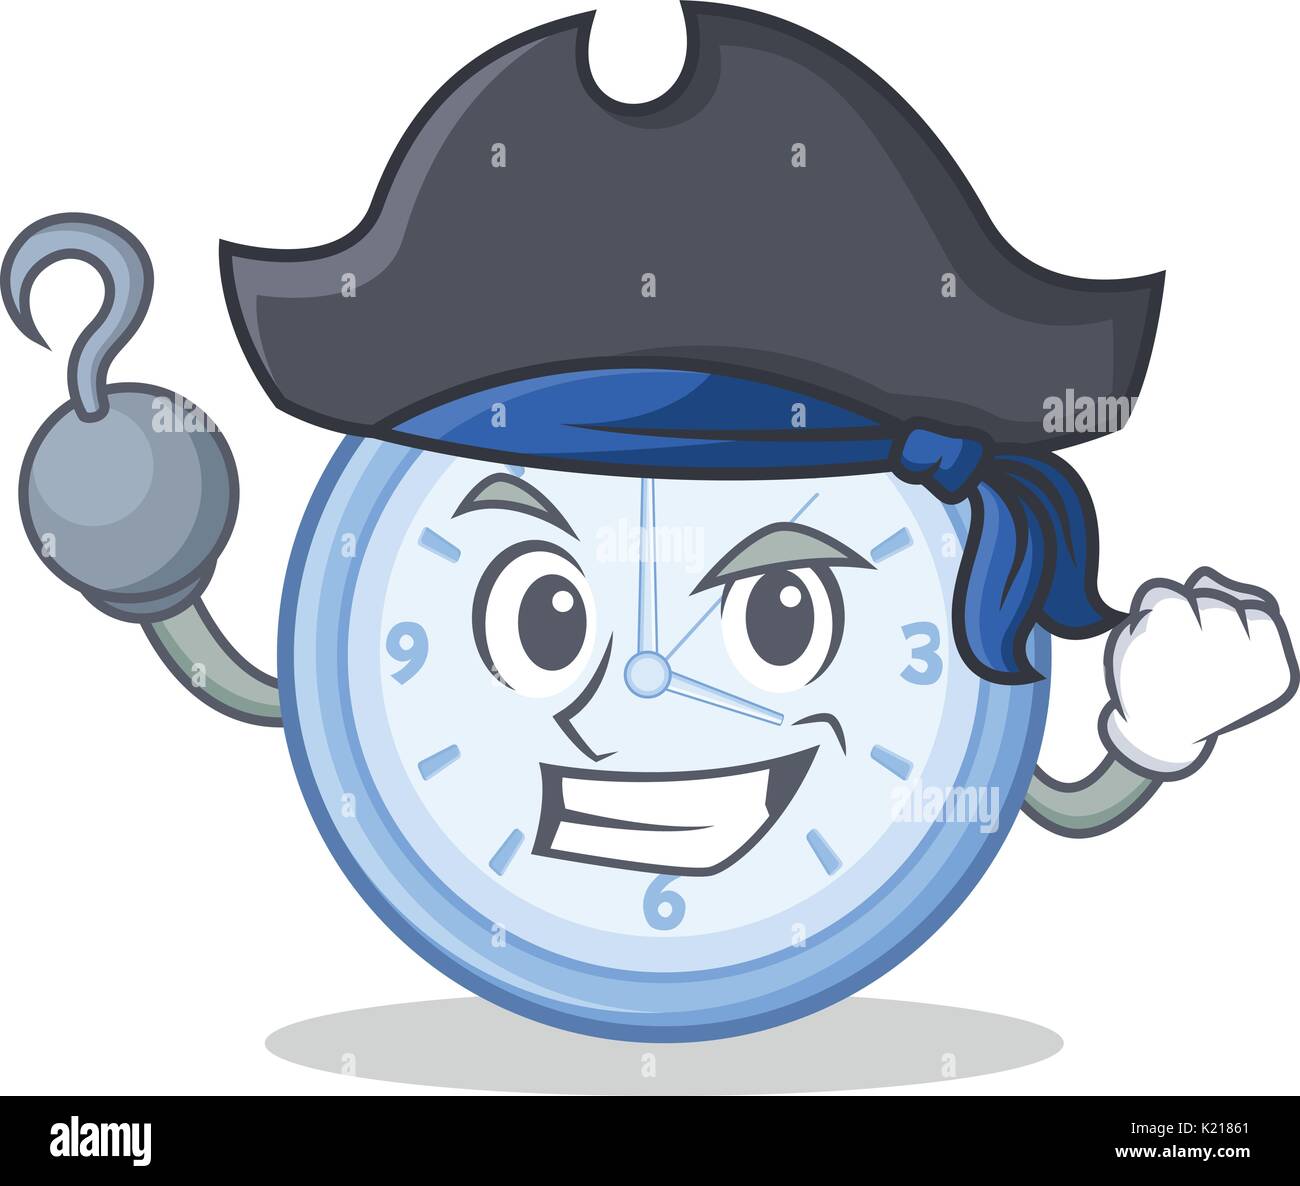 Pirate clock character cartoon style Stock Vector